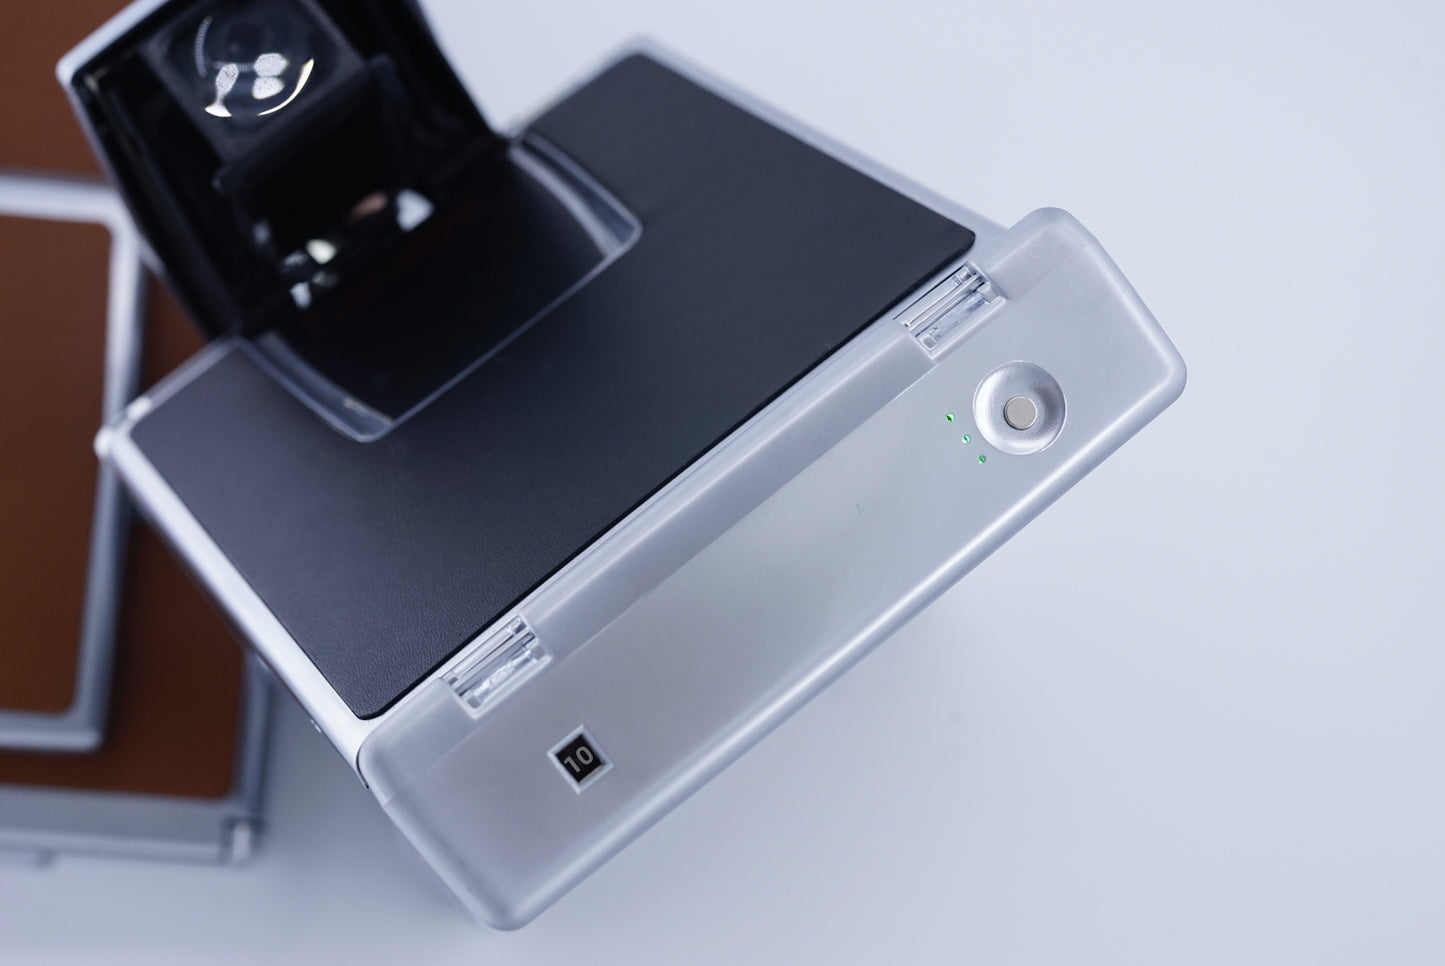 Pola Studio*Polaroid camera Power KIT adapter S ver SX70/SONAR/680/690